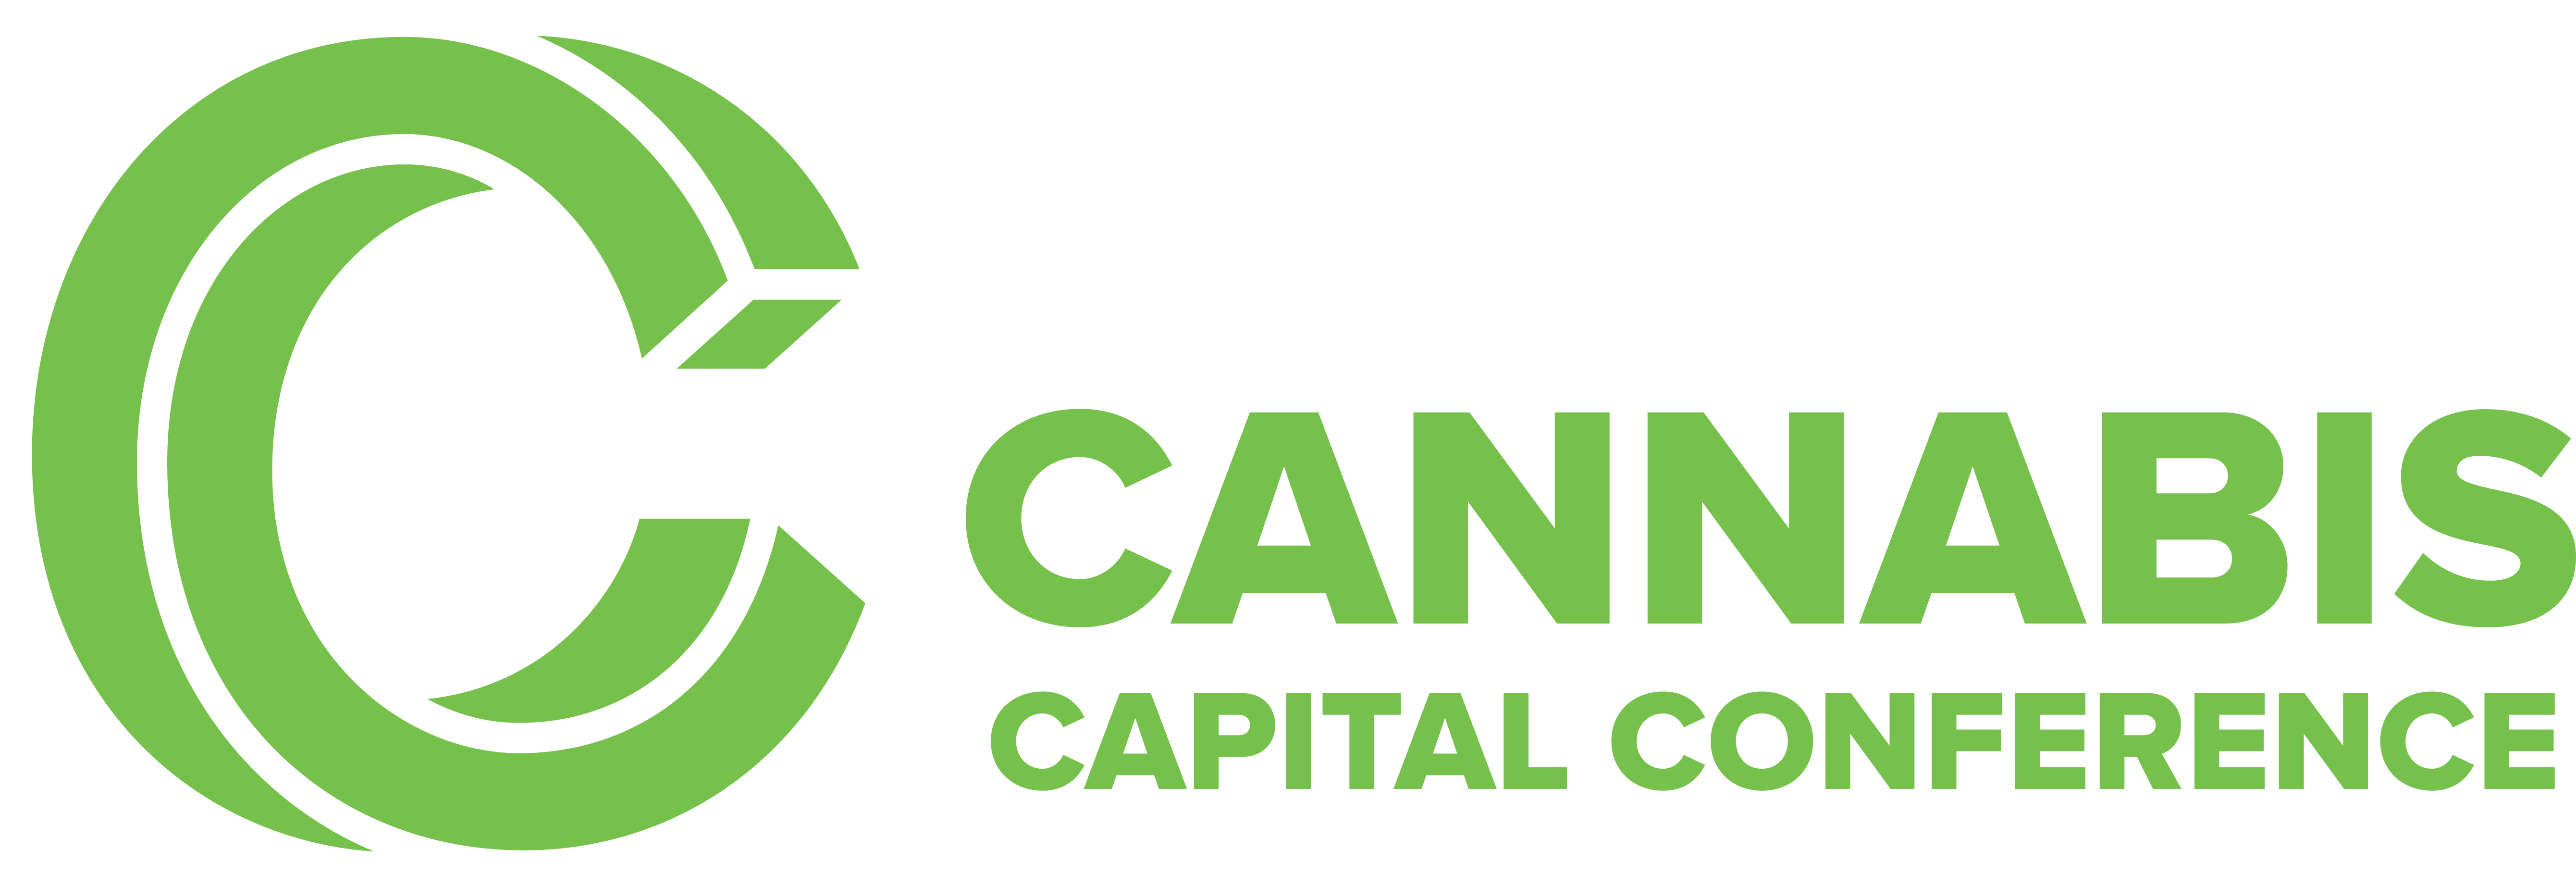 Benzinga Cannabis Capital Conference logo